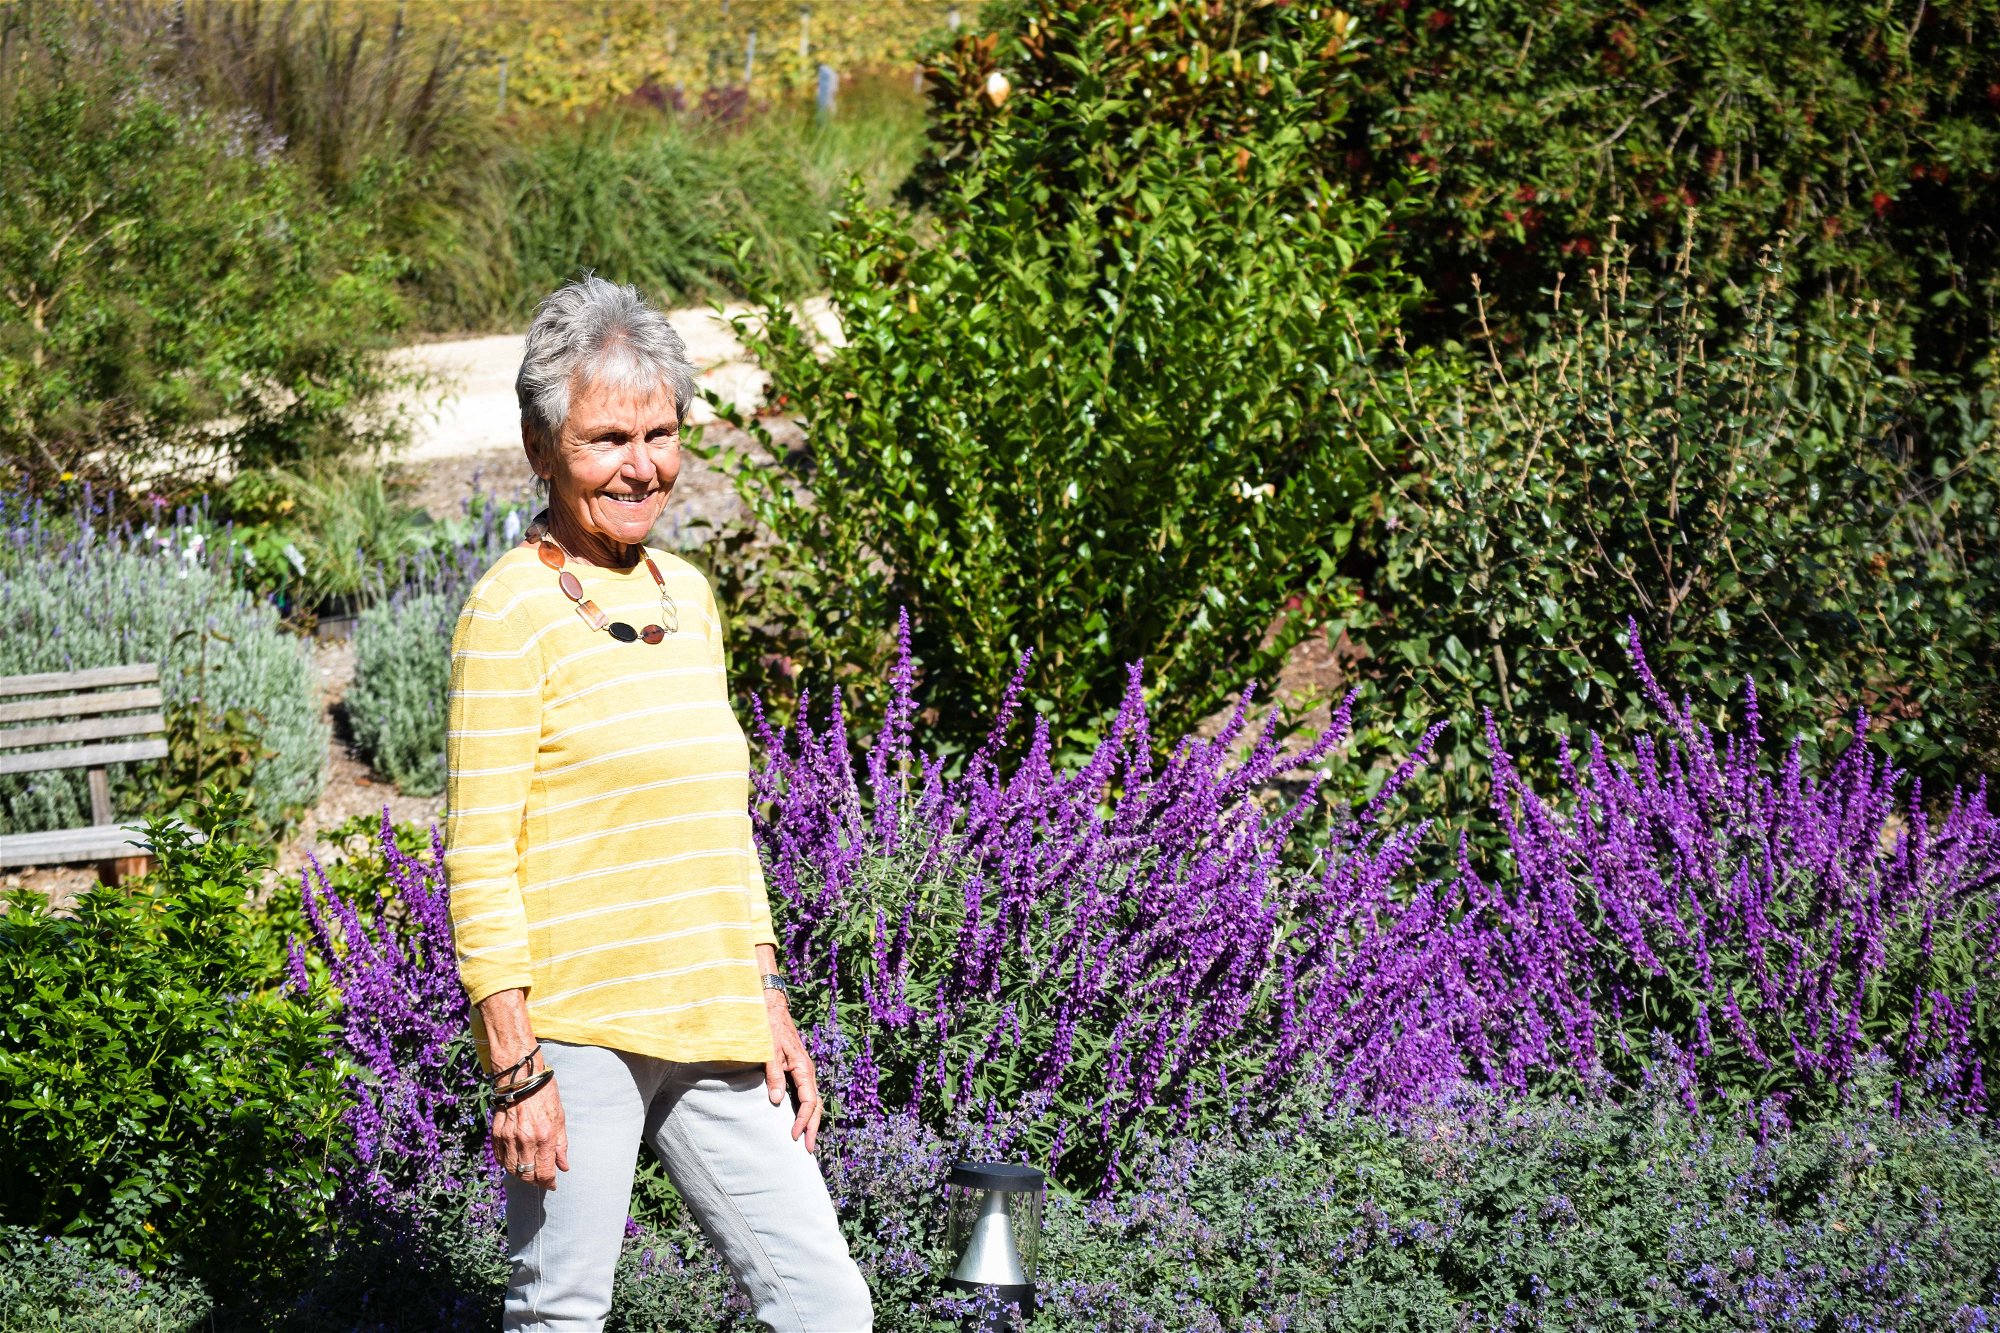 Ulrike Klein in UKARIA's garden